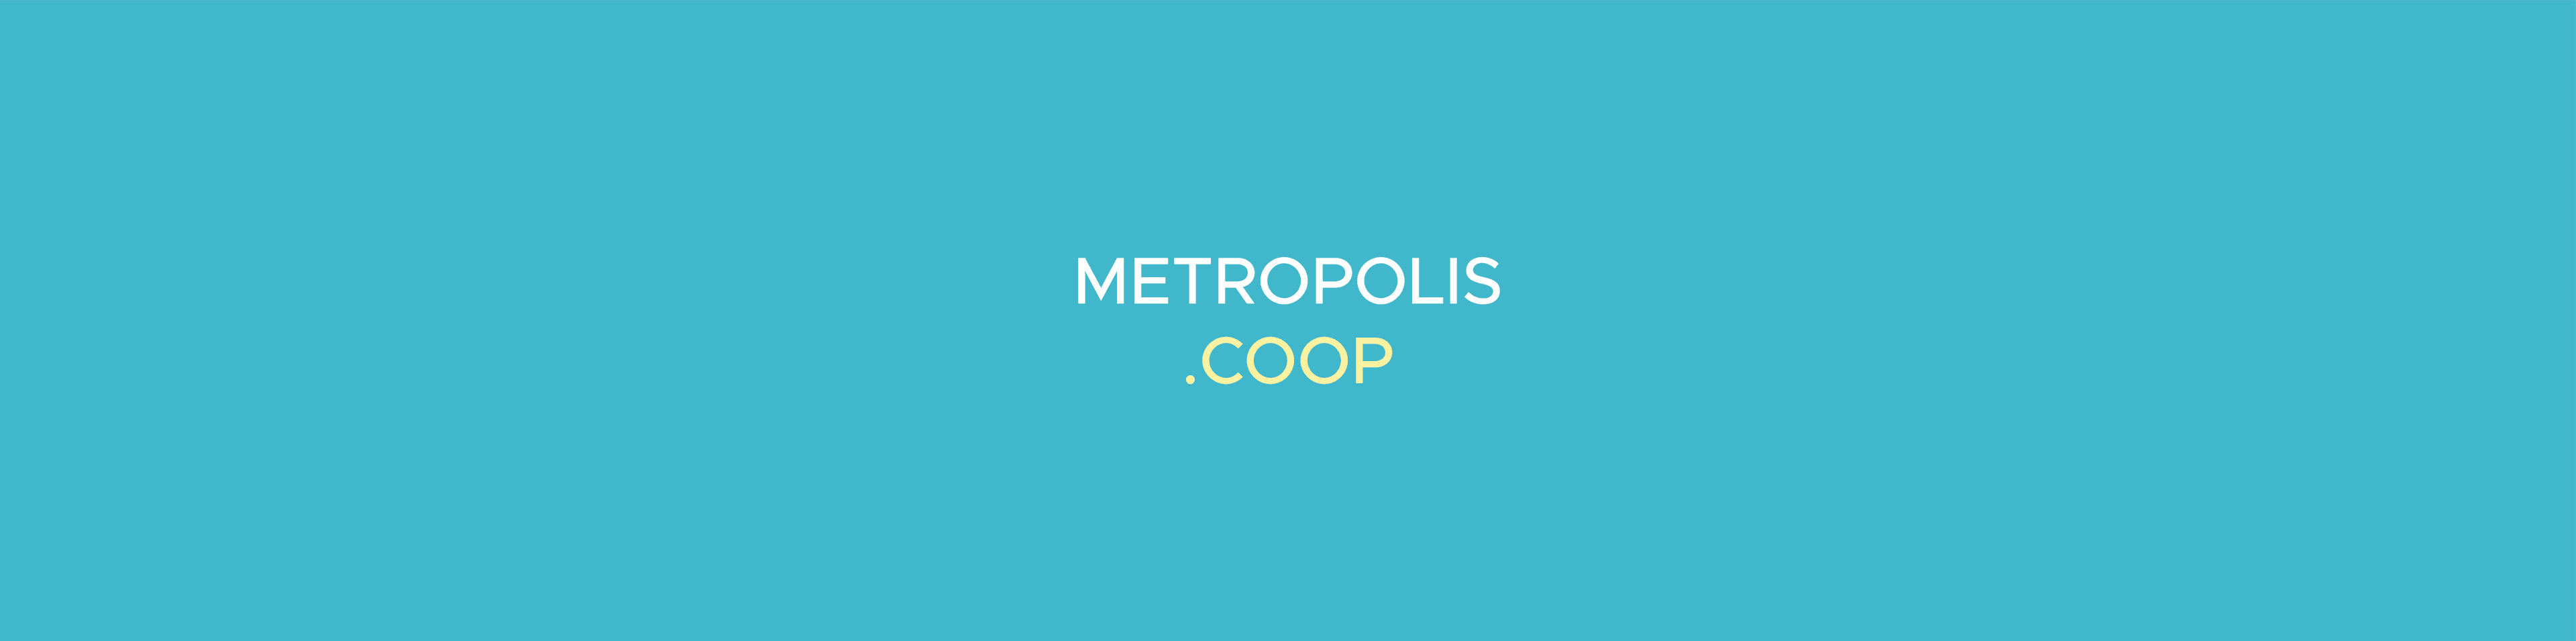 Metropolis.coop cover